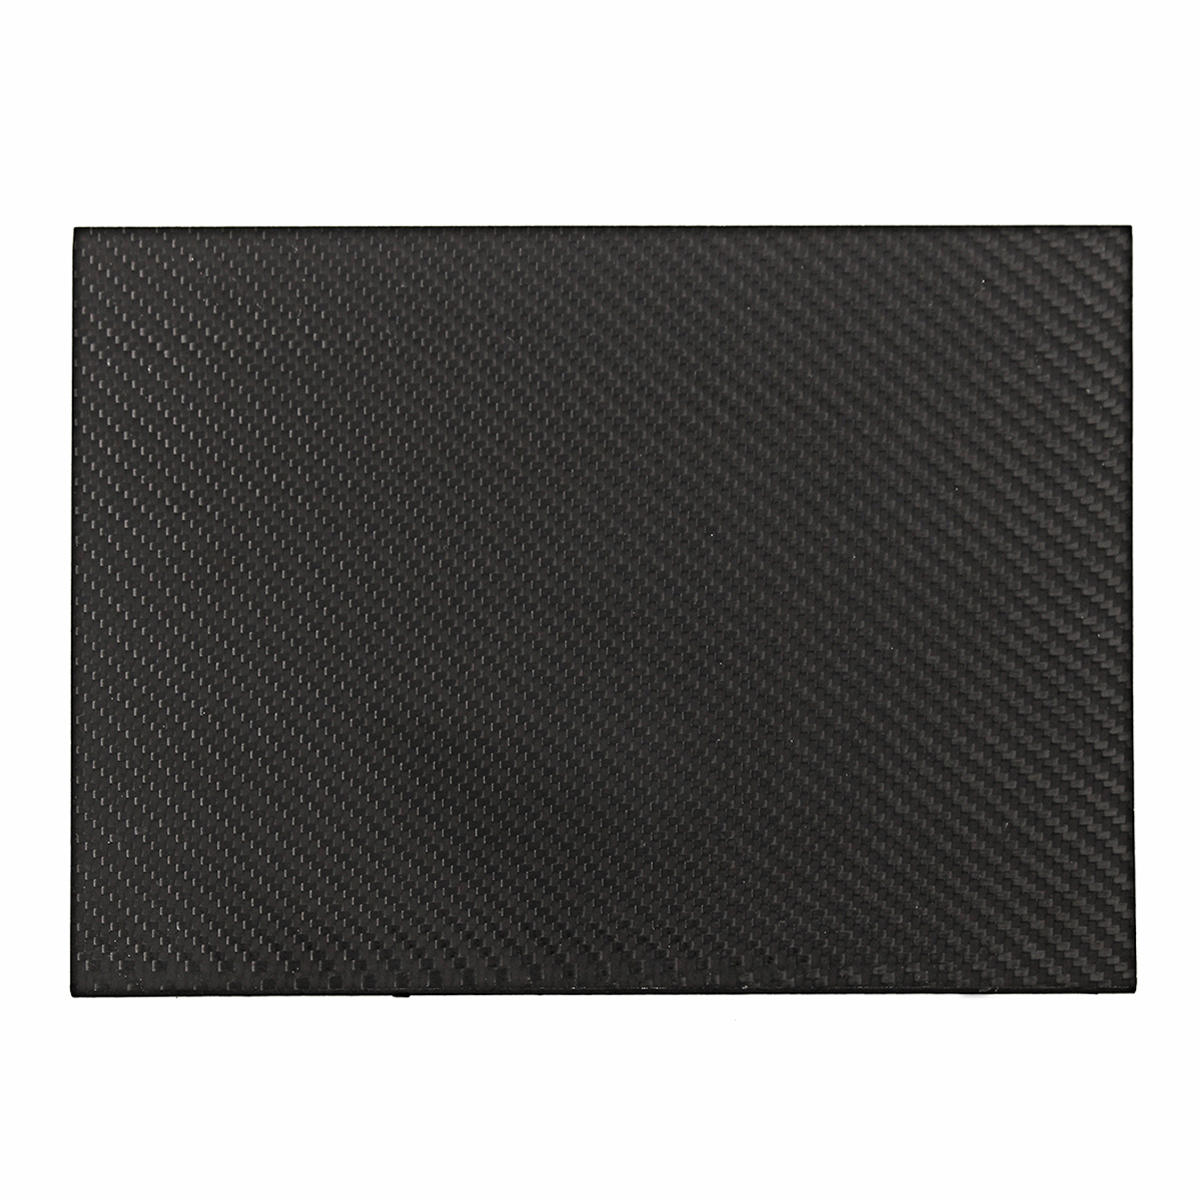 200x250x 0.5-2 Plain Weave mm Matte Carbon Fiber Plate Panel Sheet 3K Twill